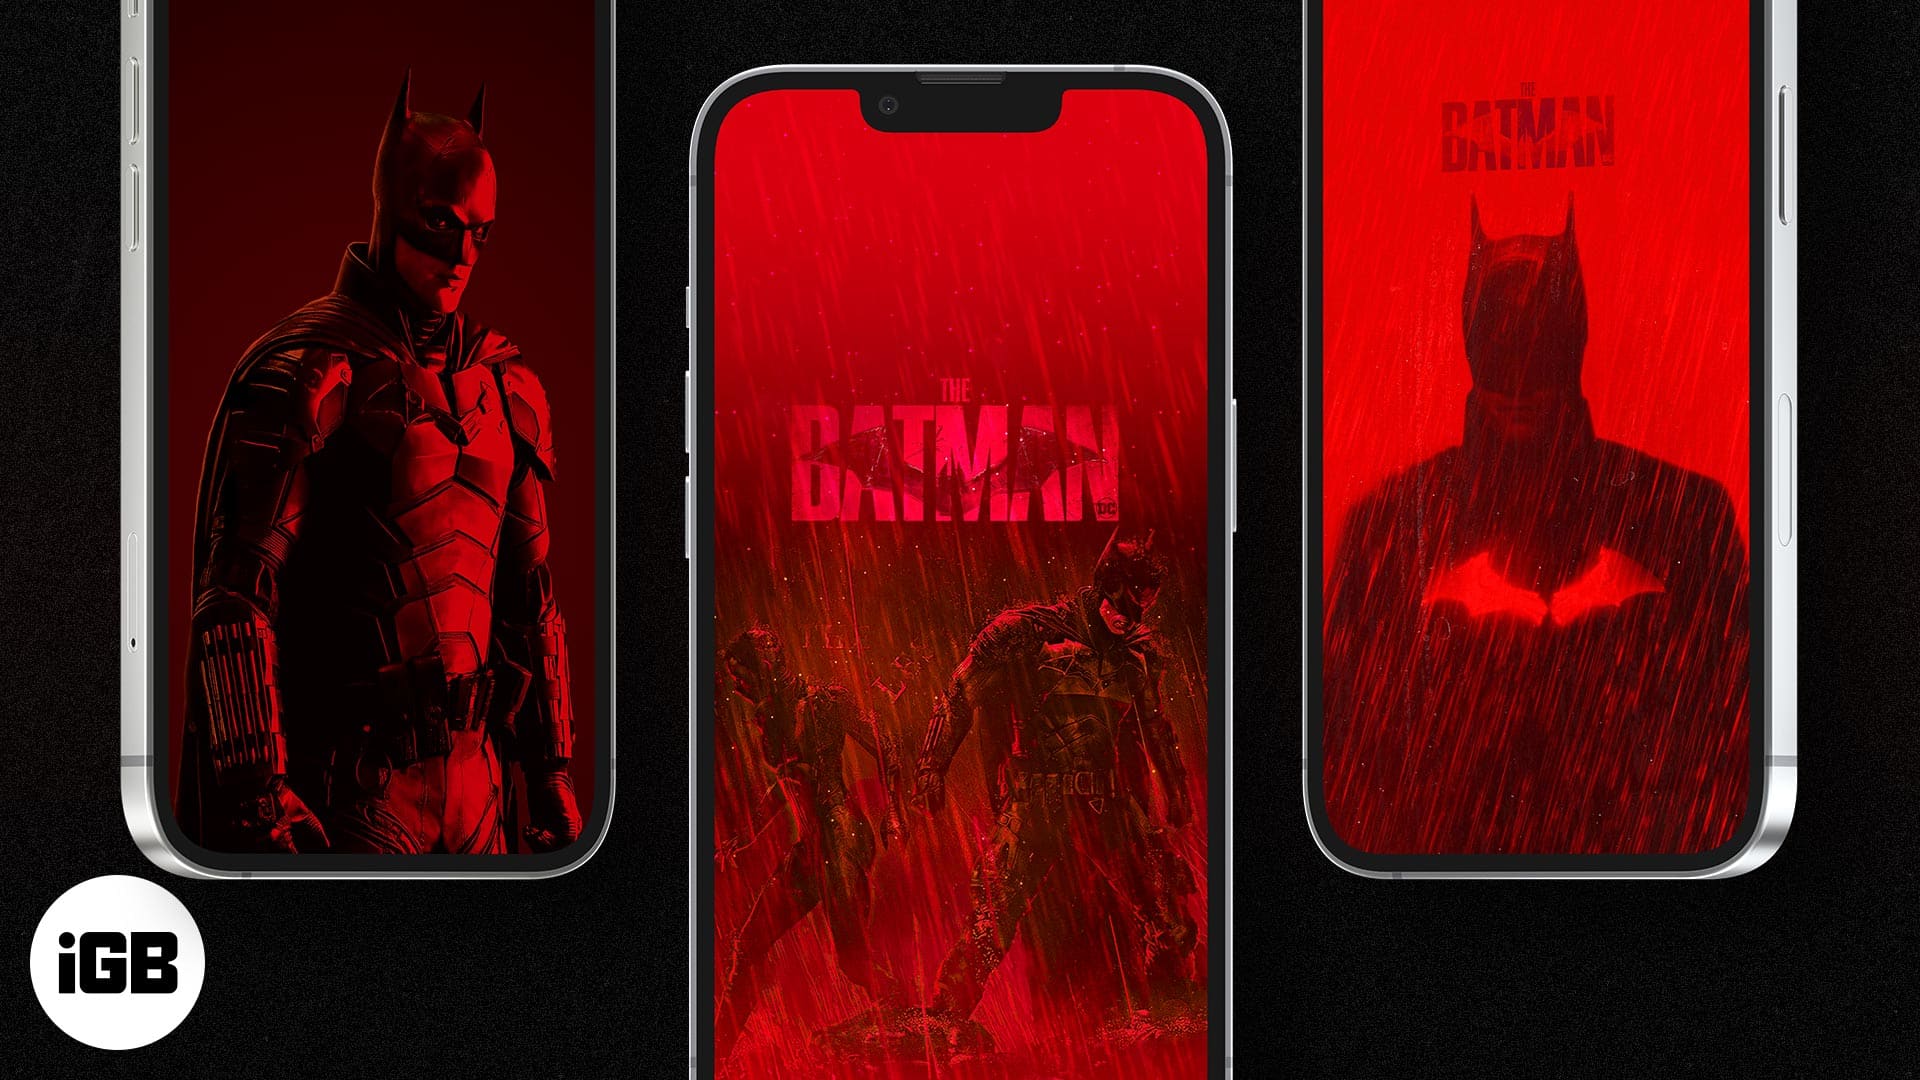 Batman  Batman wallpaper, Batman wallpaper iphone, Batman dark